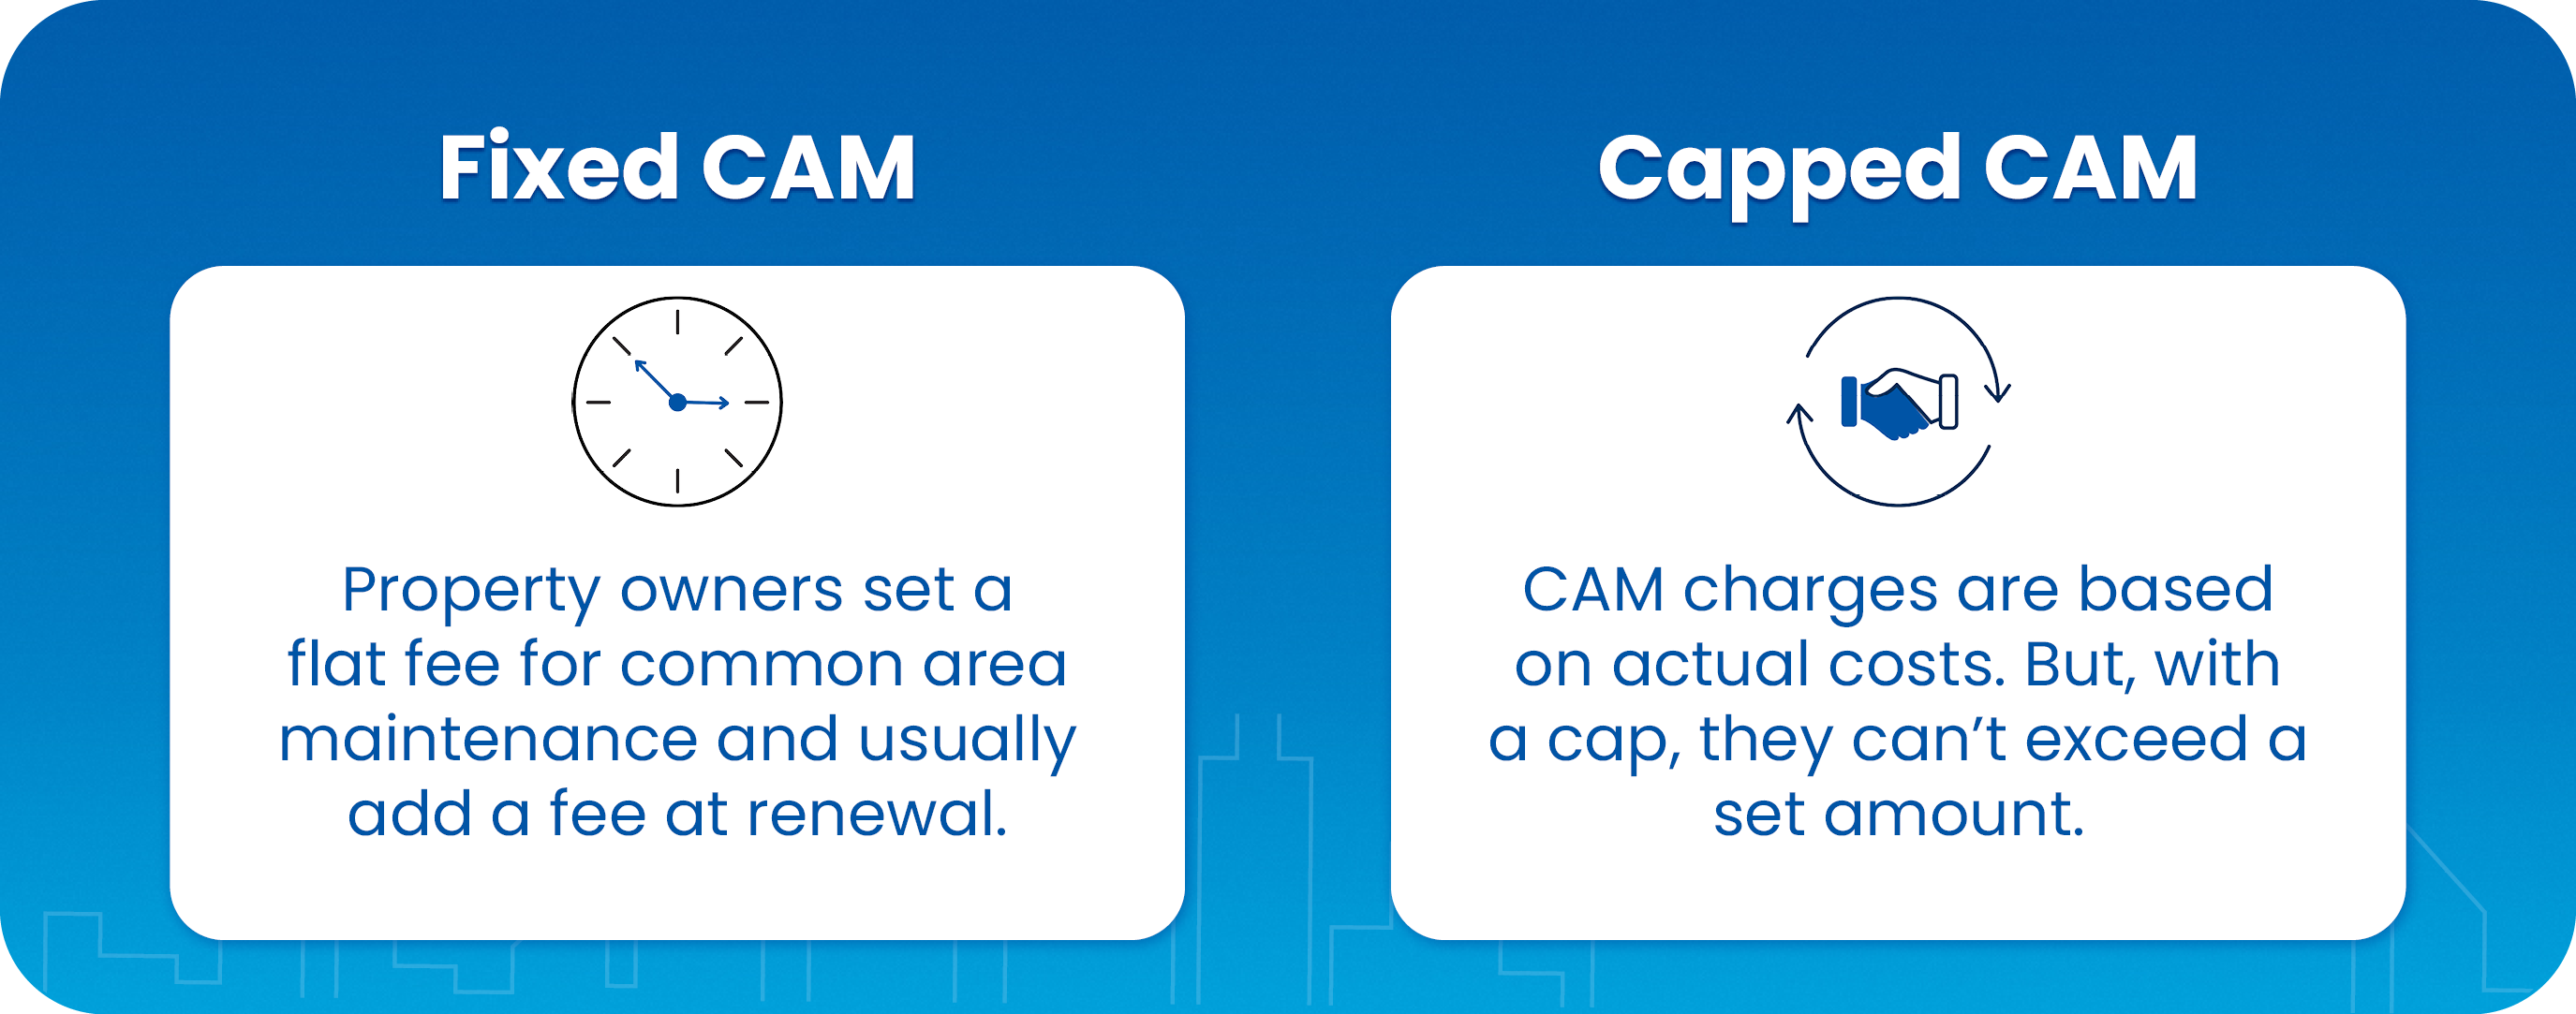 CAM types comparison